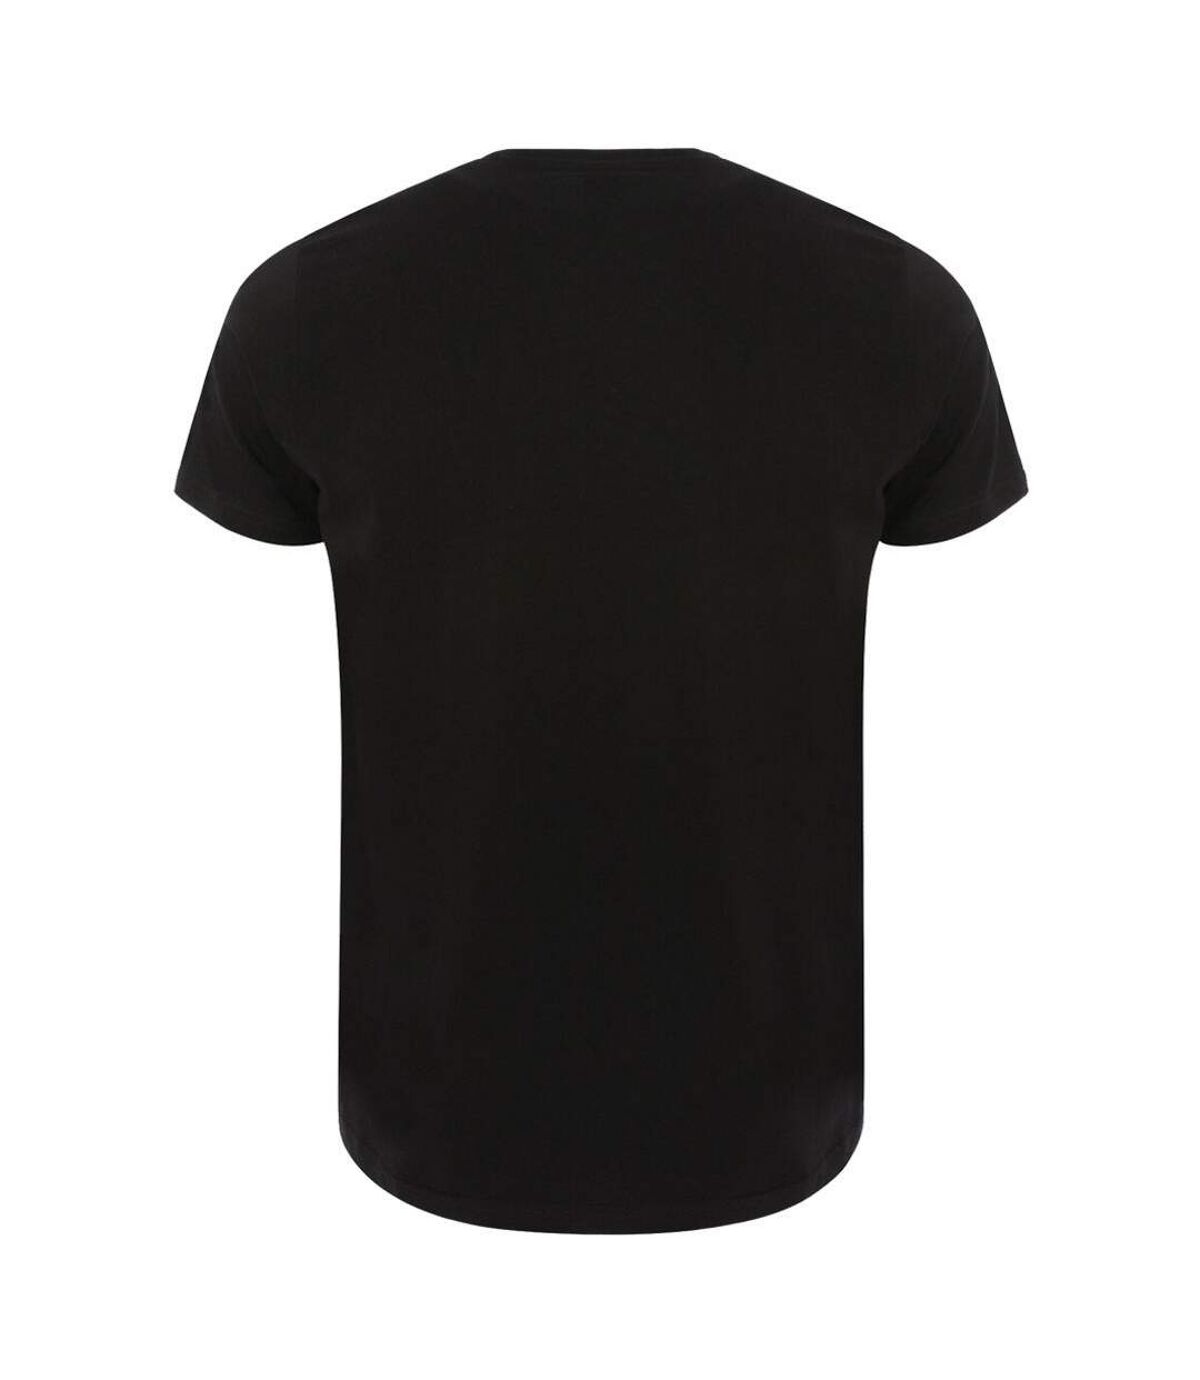 Liverpool FC - T-shirt THIS IS ANFIELD - Homme (Noir / Gris) - UTTA8609